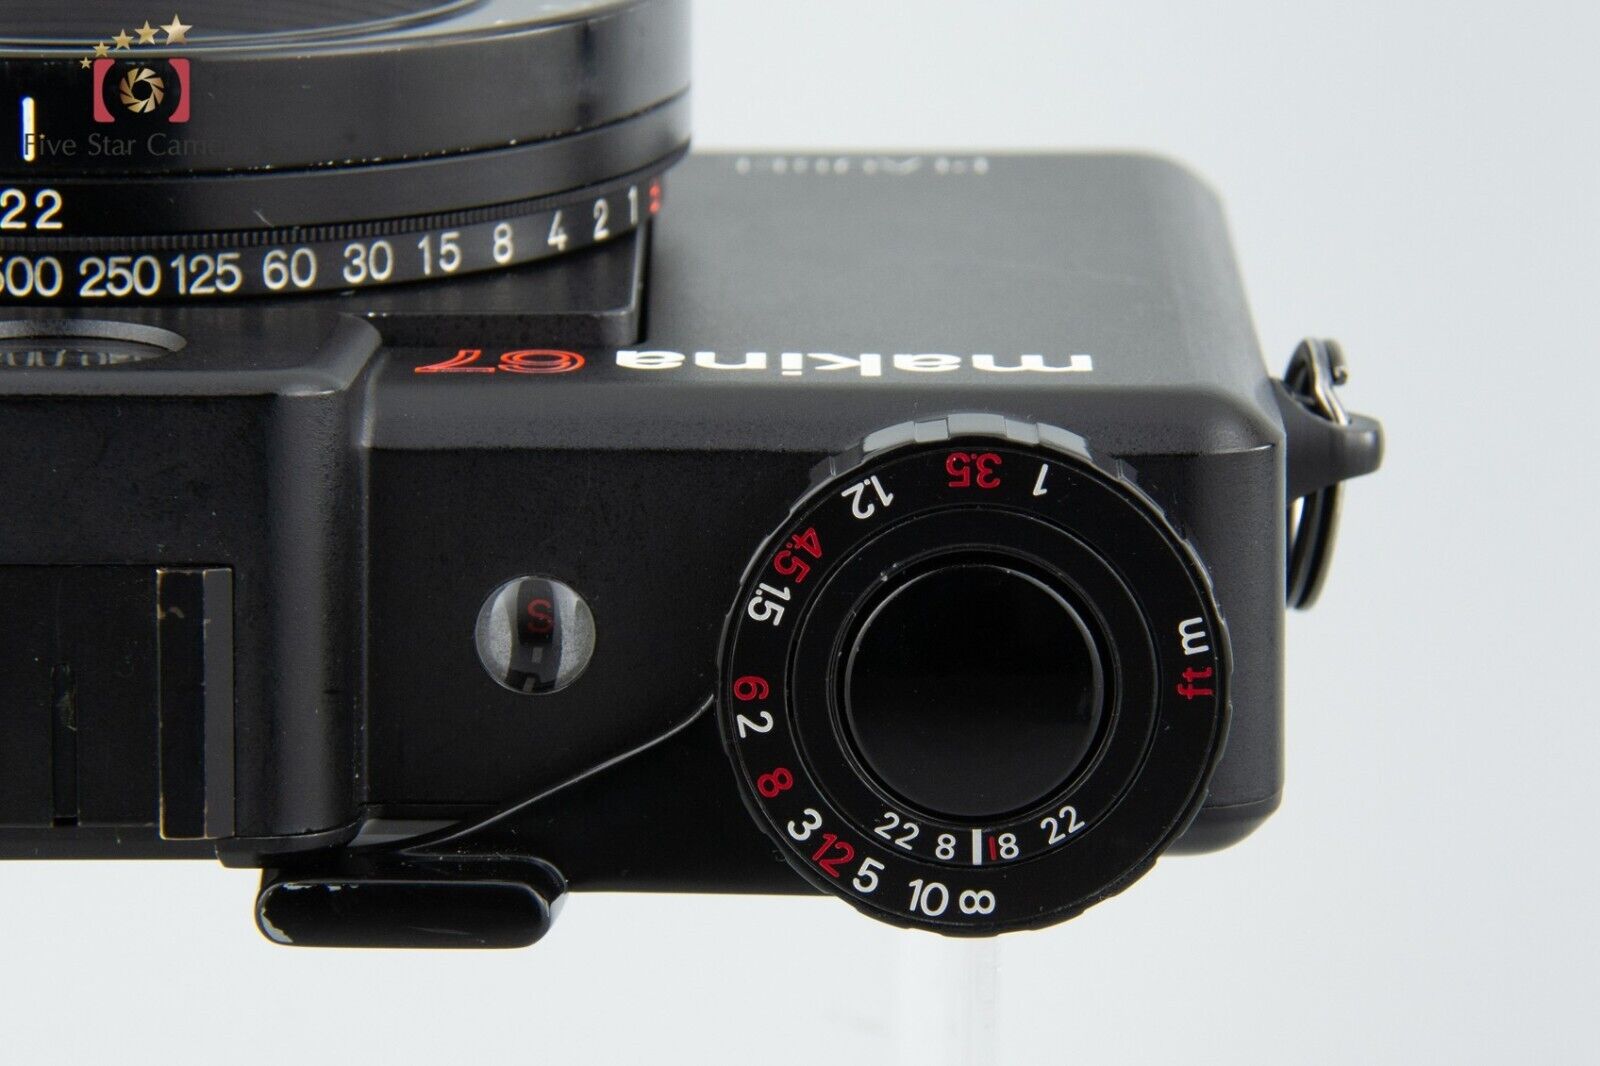 Plaubel makina 67 6x7 Medium Format Film Camera